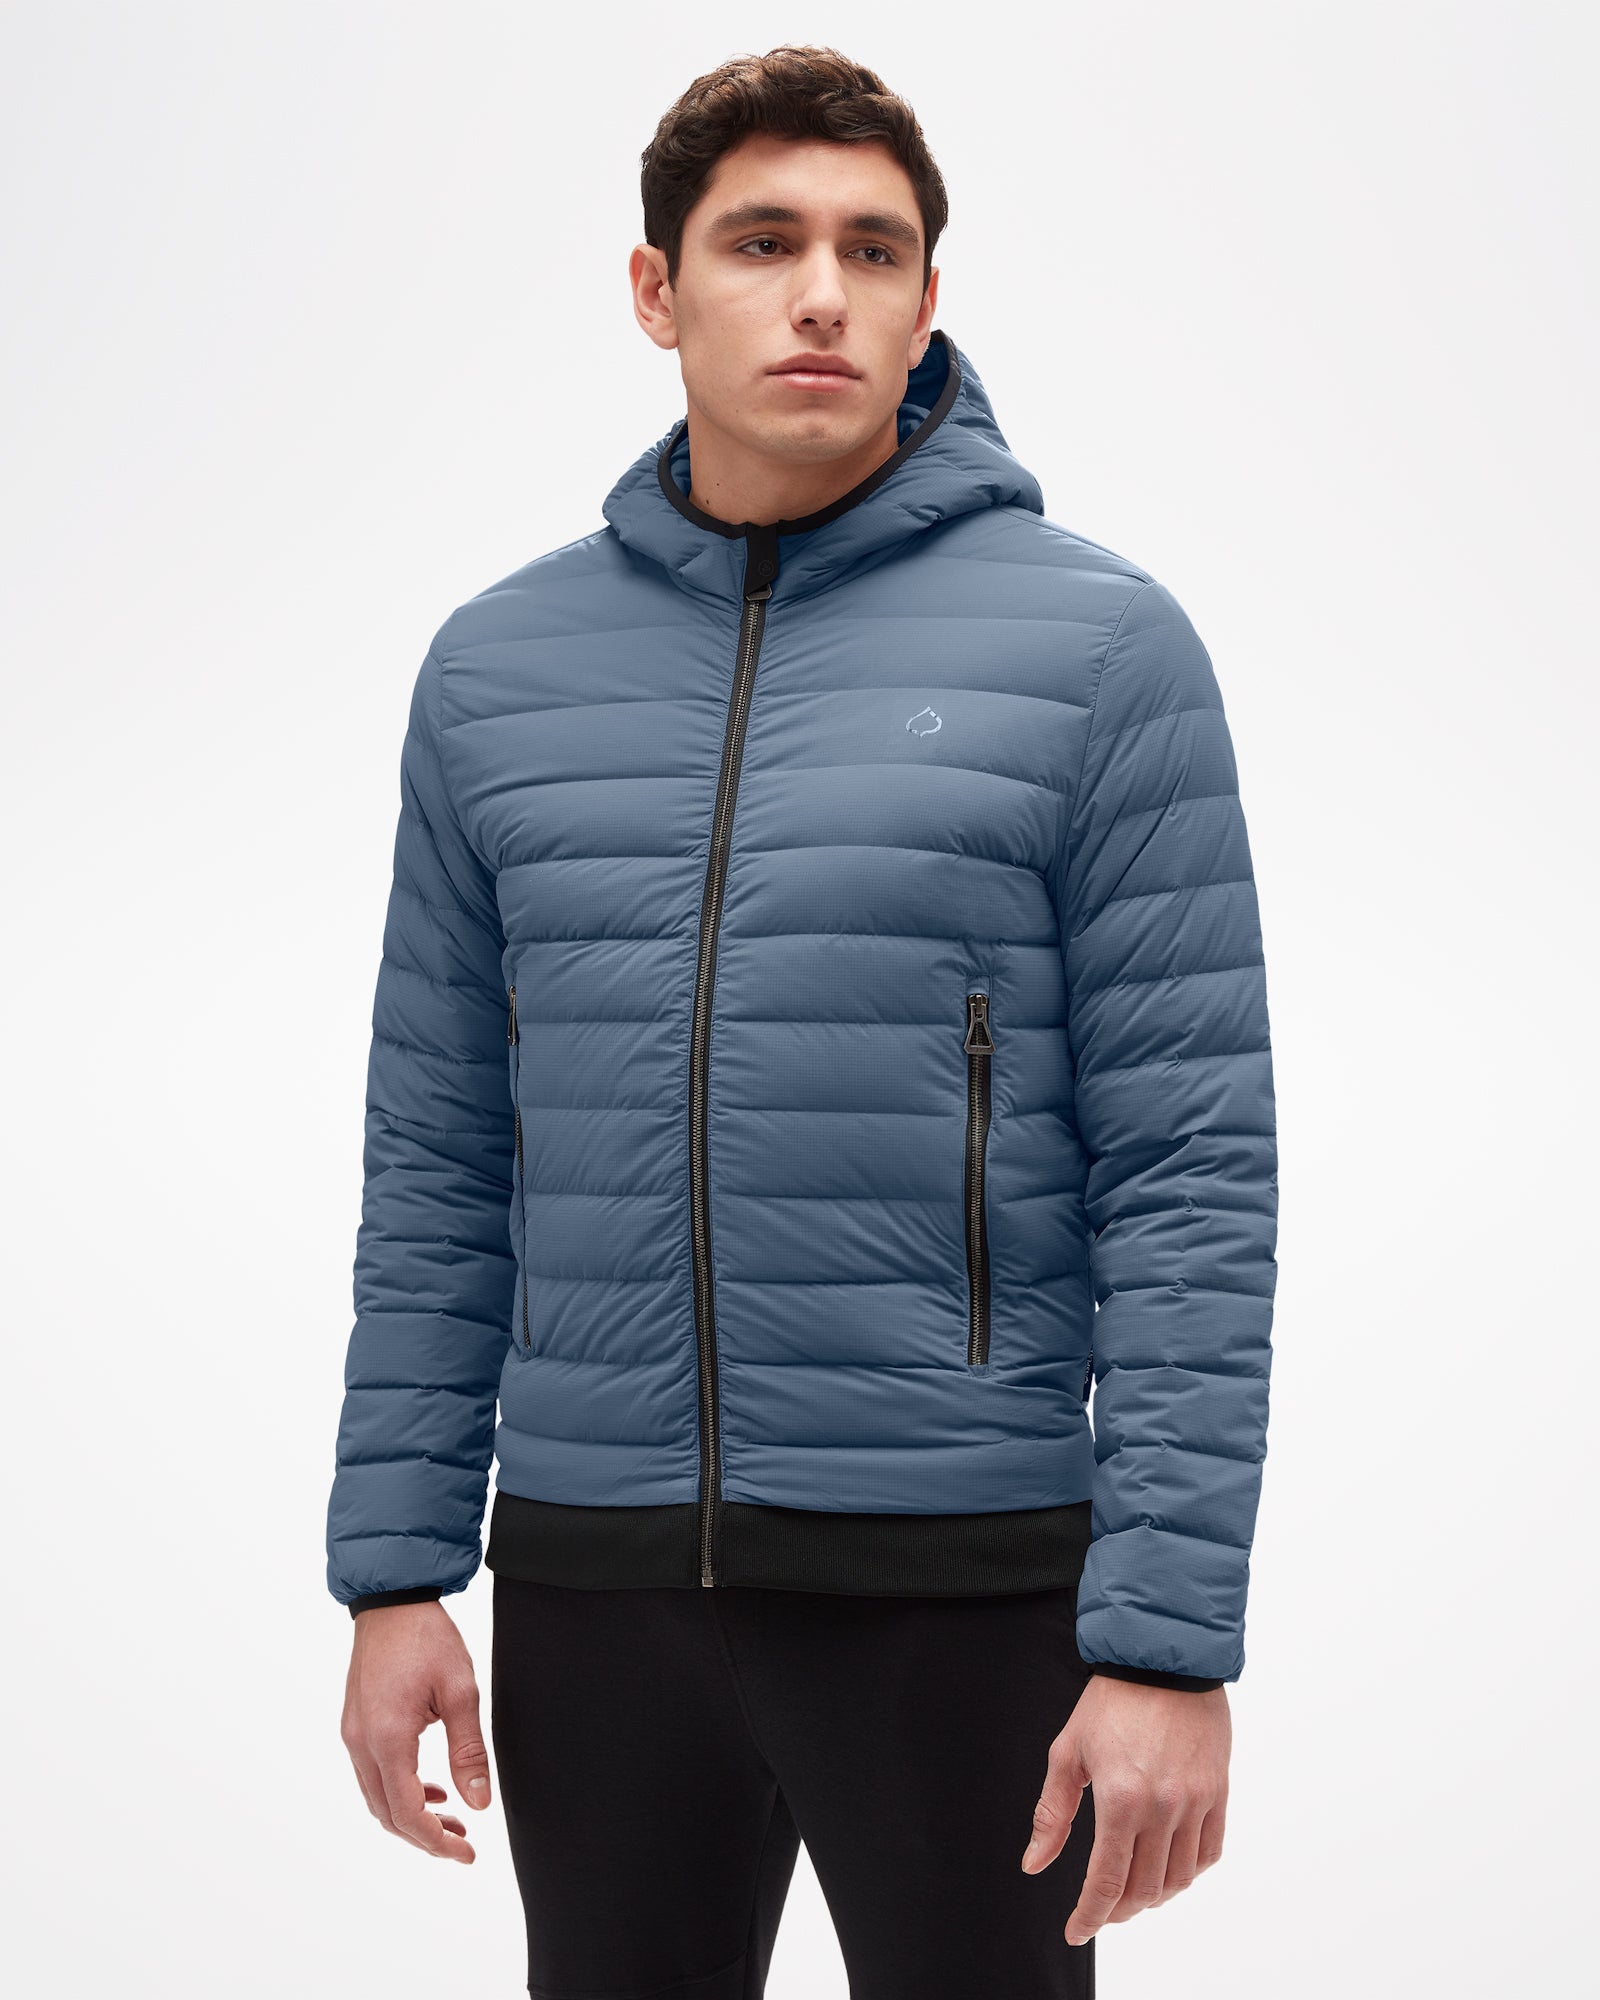 Men's Coats & Jackets  ASPENX Premium Outerwear for Men